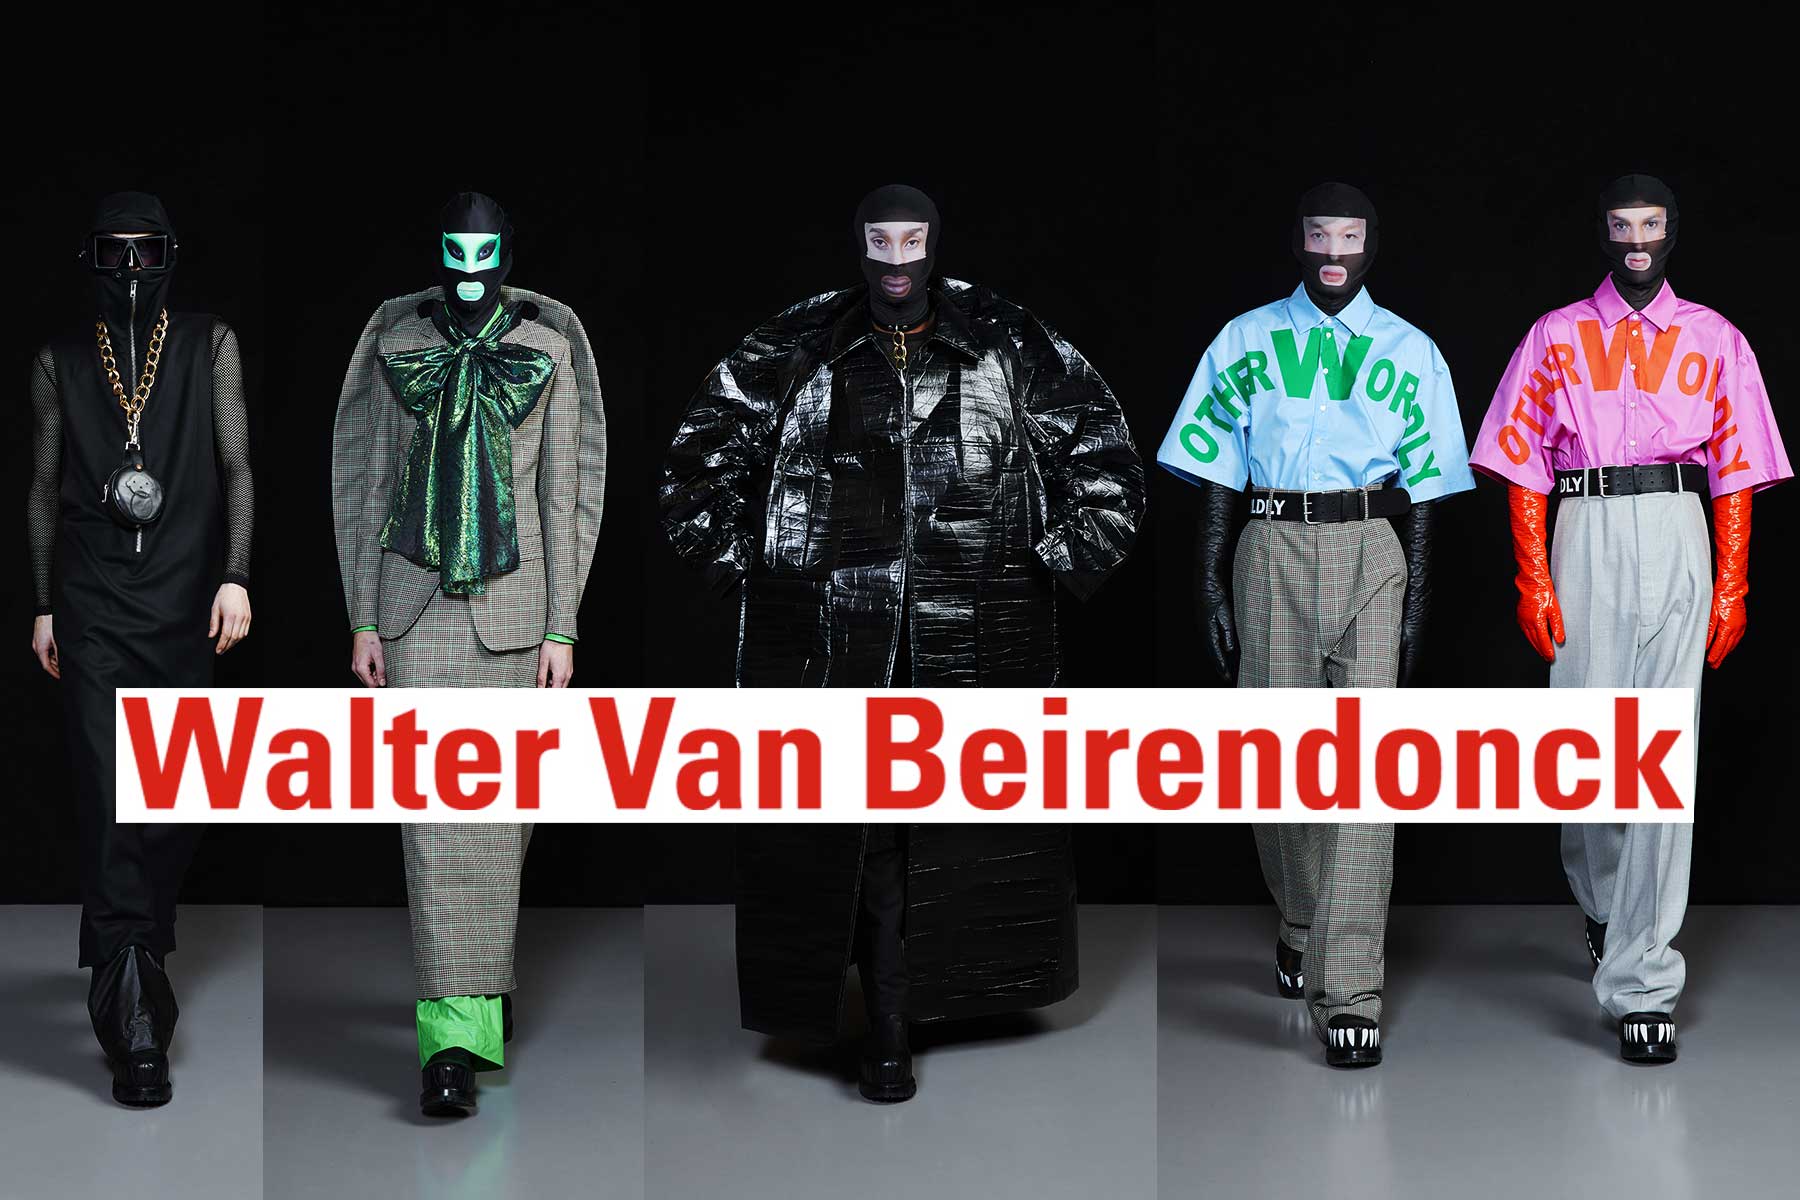 Walter Van Beirendonck, Belgian fashion designer and head of the